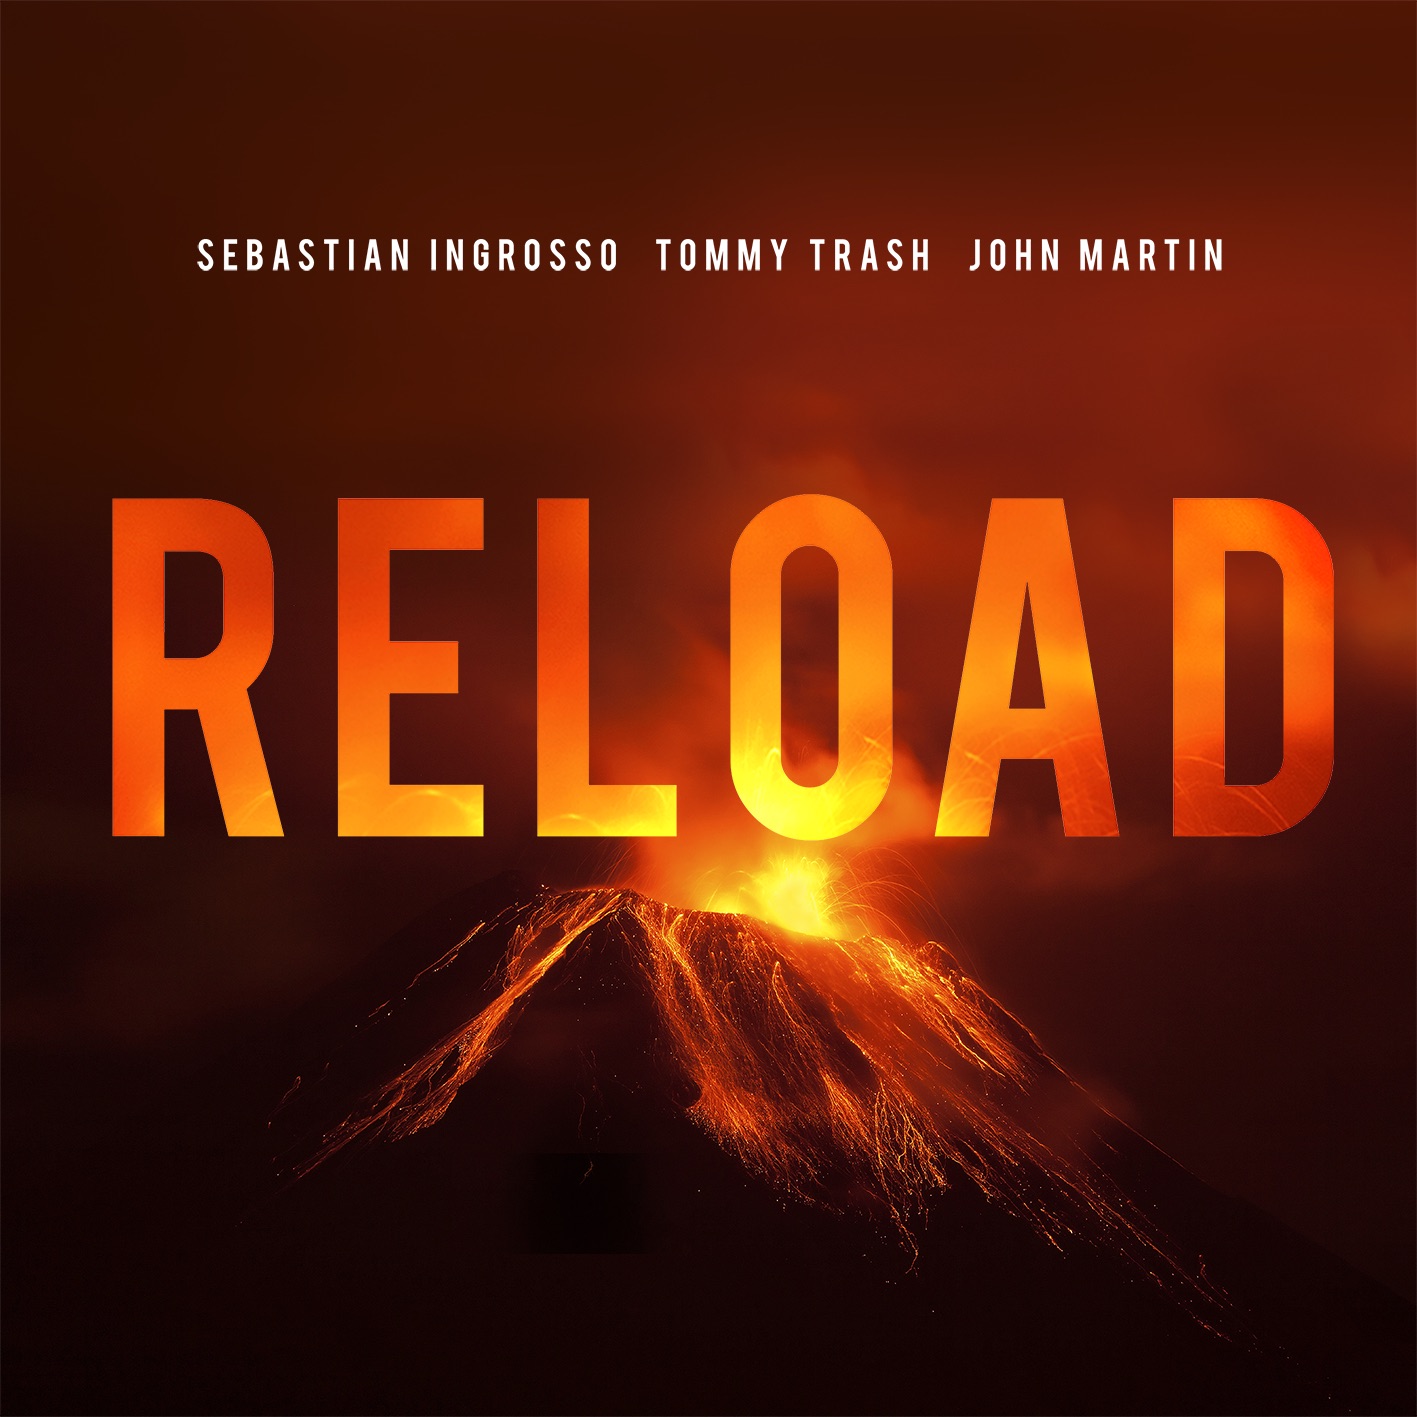 Sebastian Ingrosso Tommy Trash - Reload - YouTube